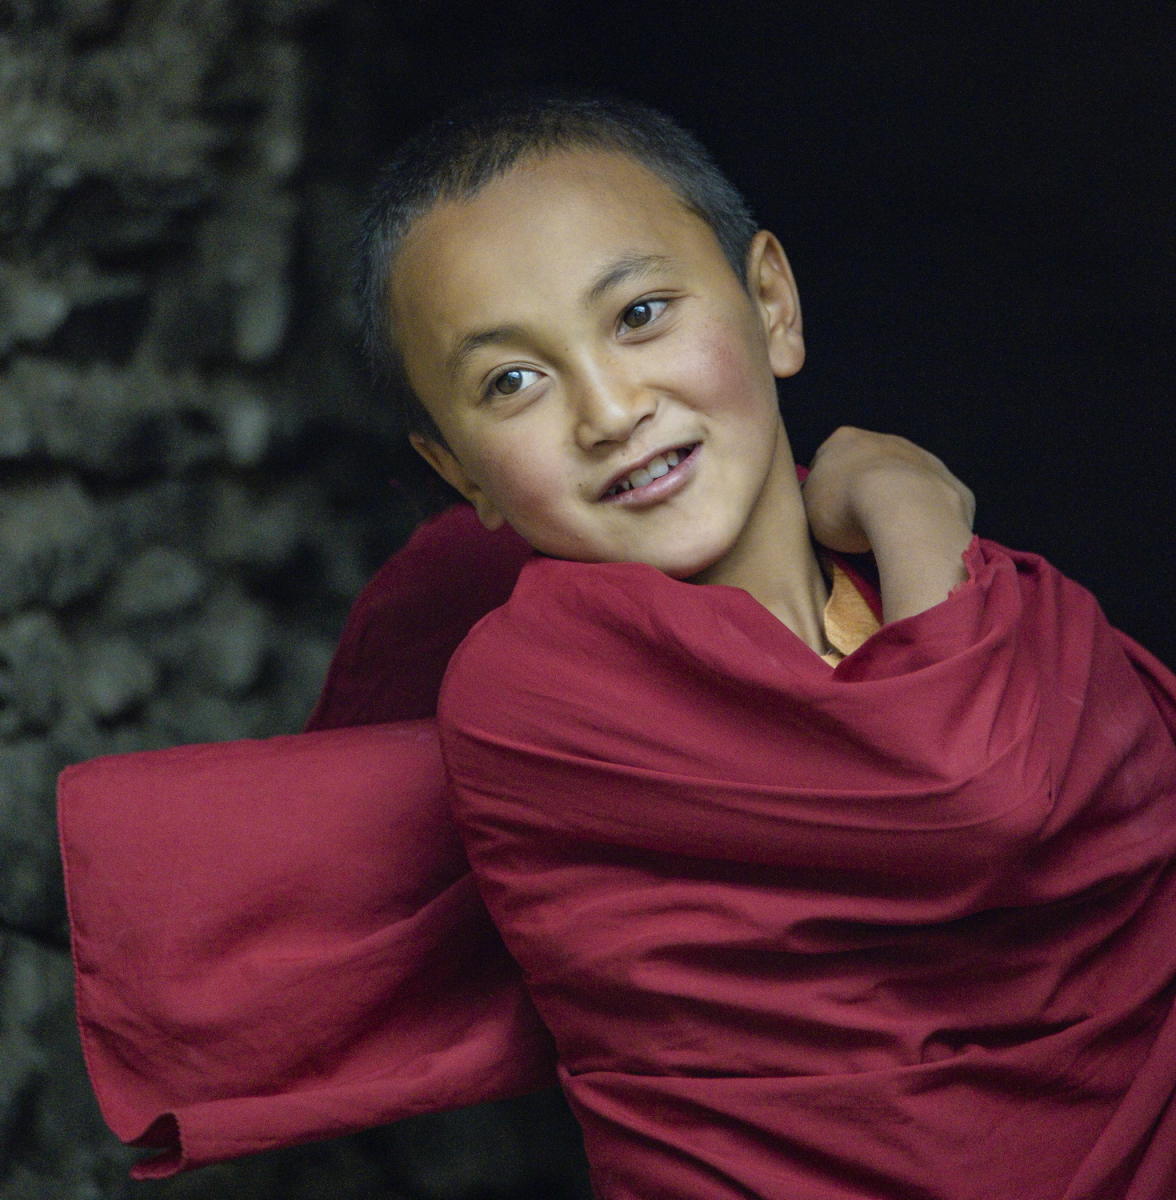 DSC_1723_1A1 - Novice Monk (Lamayuru Monastery)